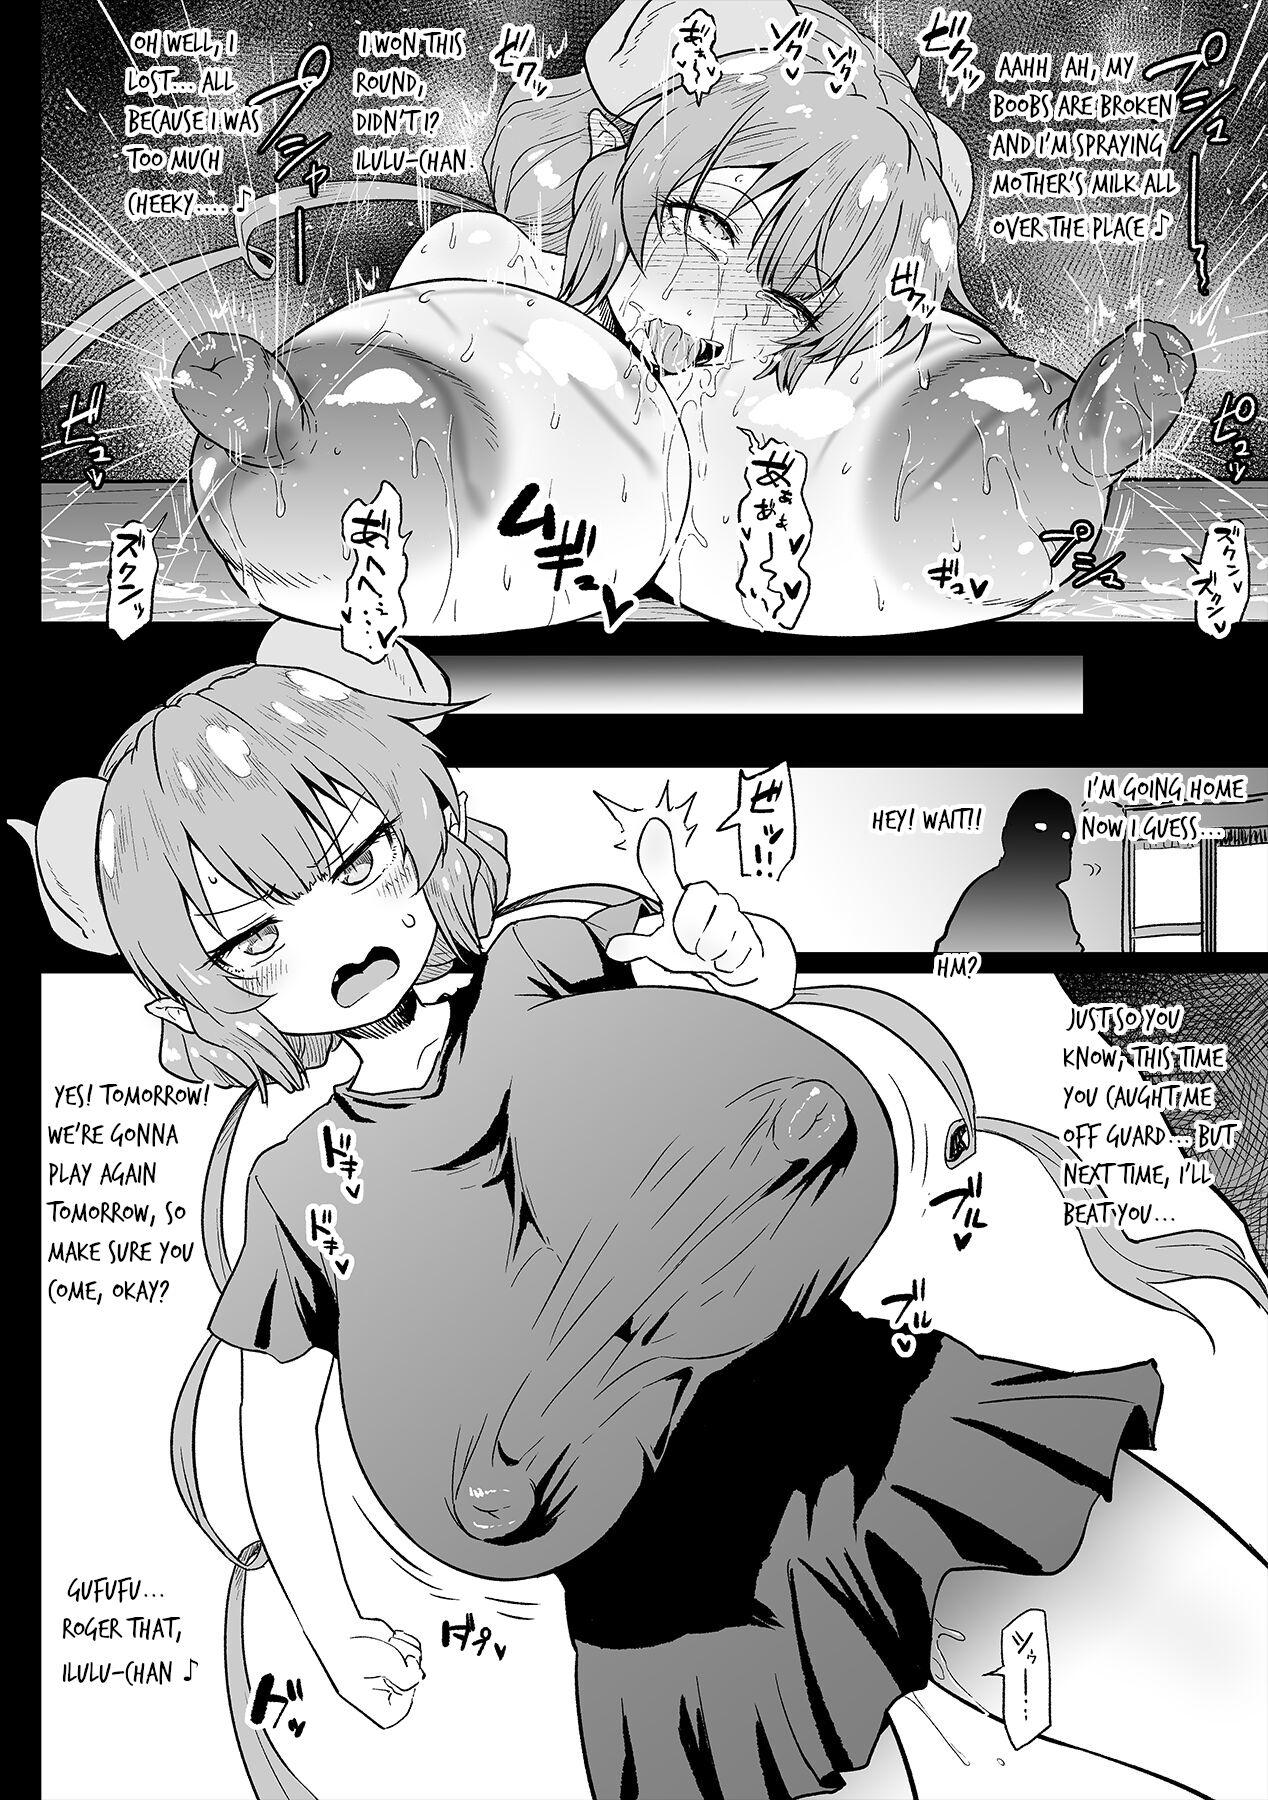 Man Ilulu vs. creepy otaku - Kobayashi-san-chi no maid dragon Latin - Page 5